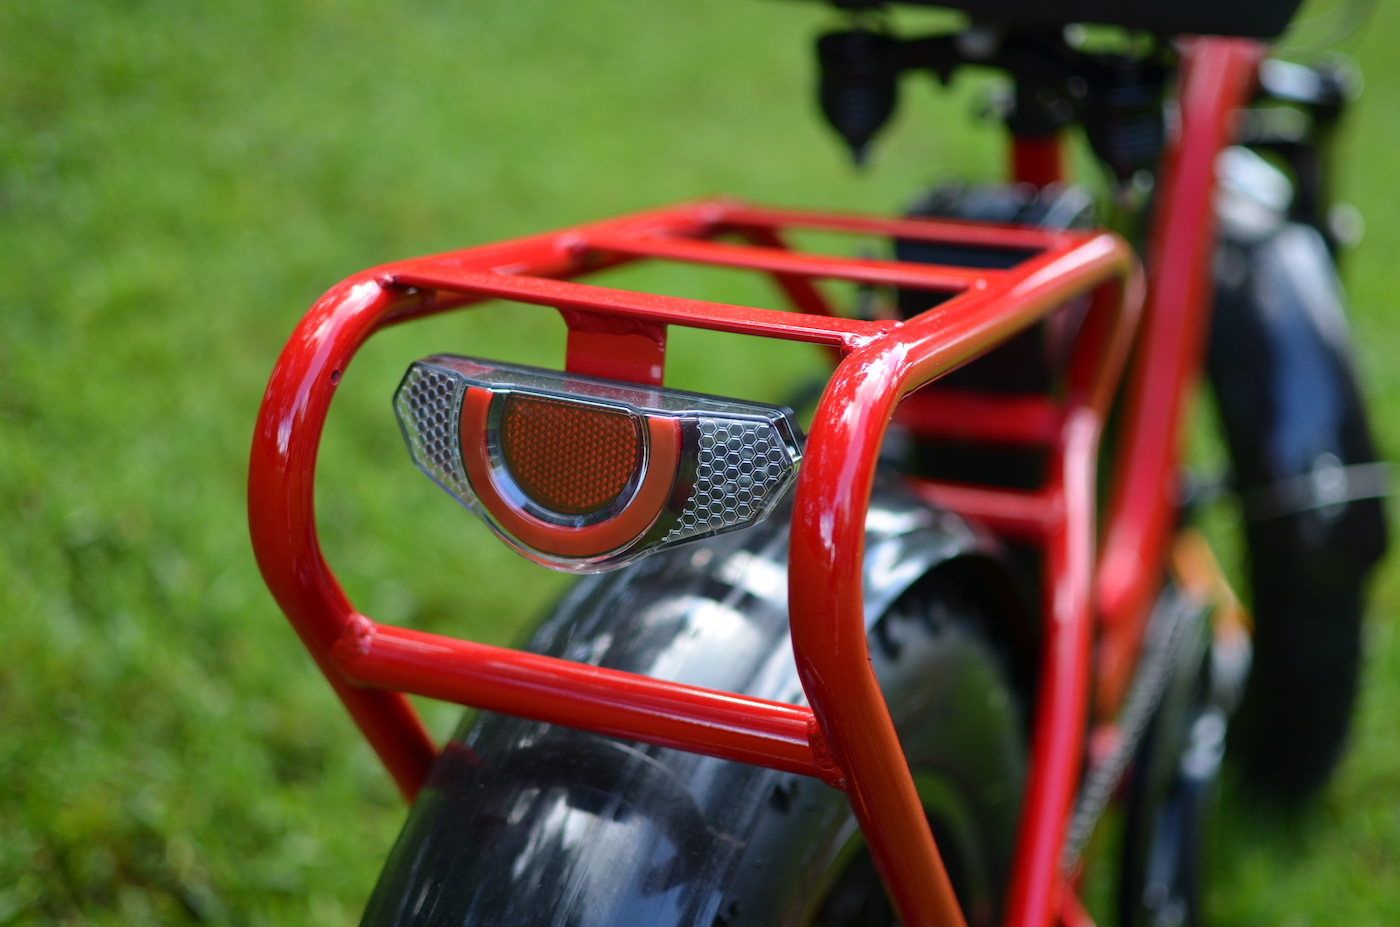 veego bike accessories